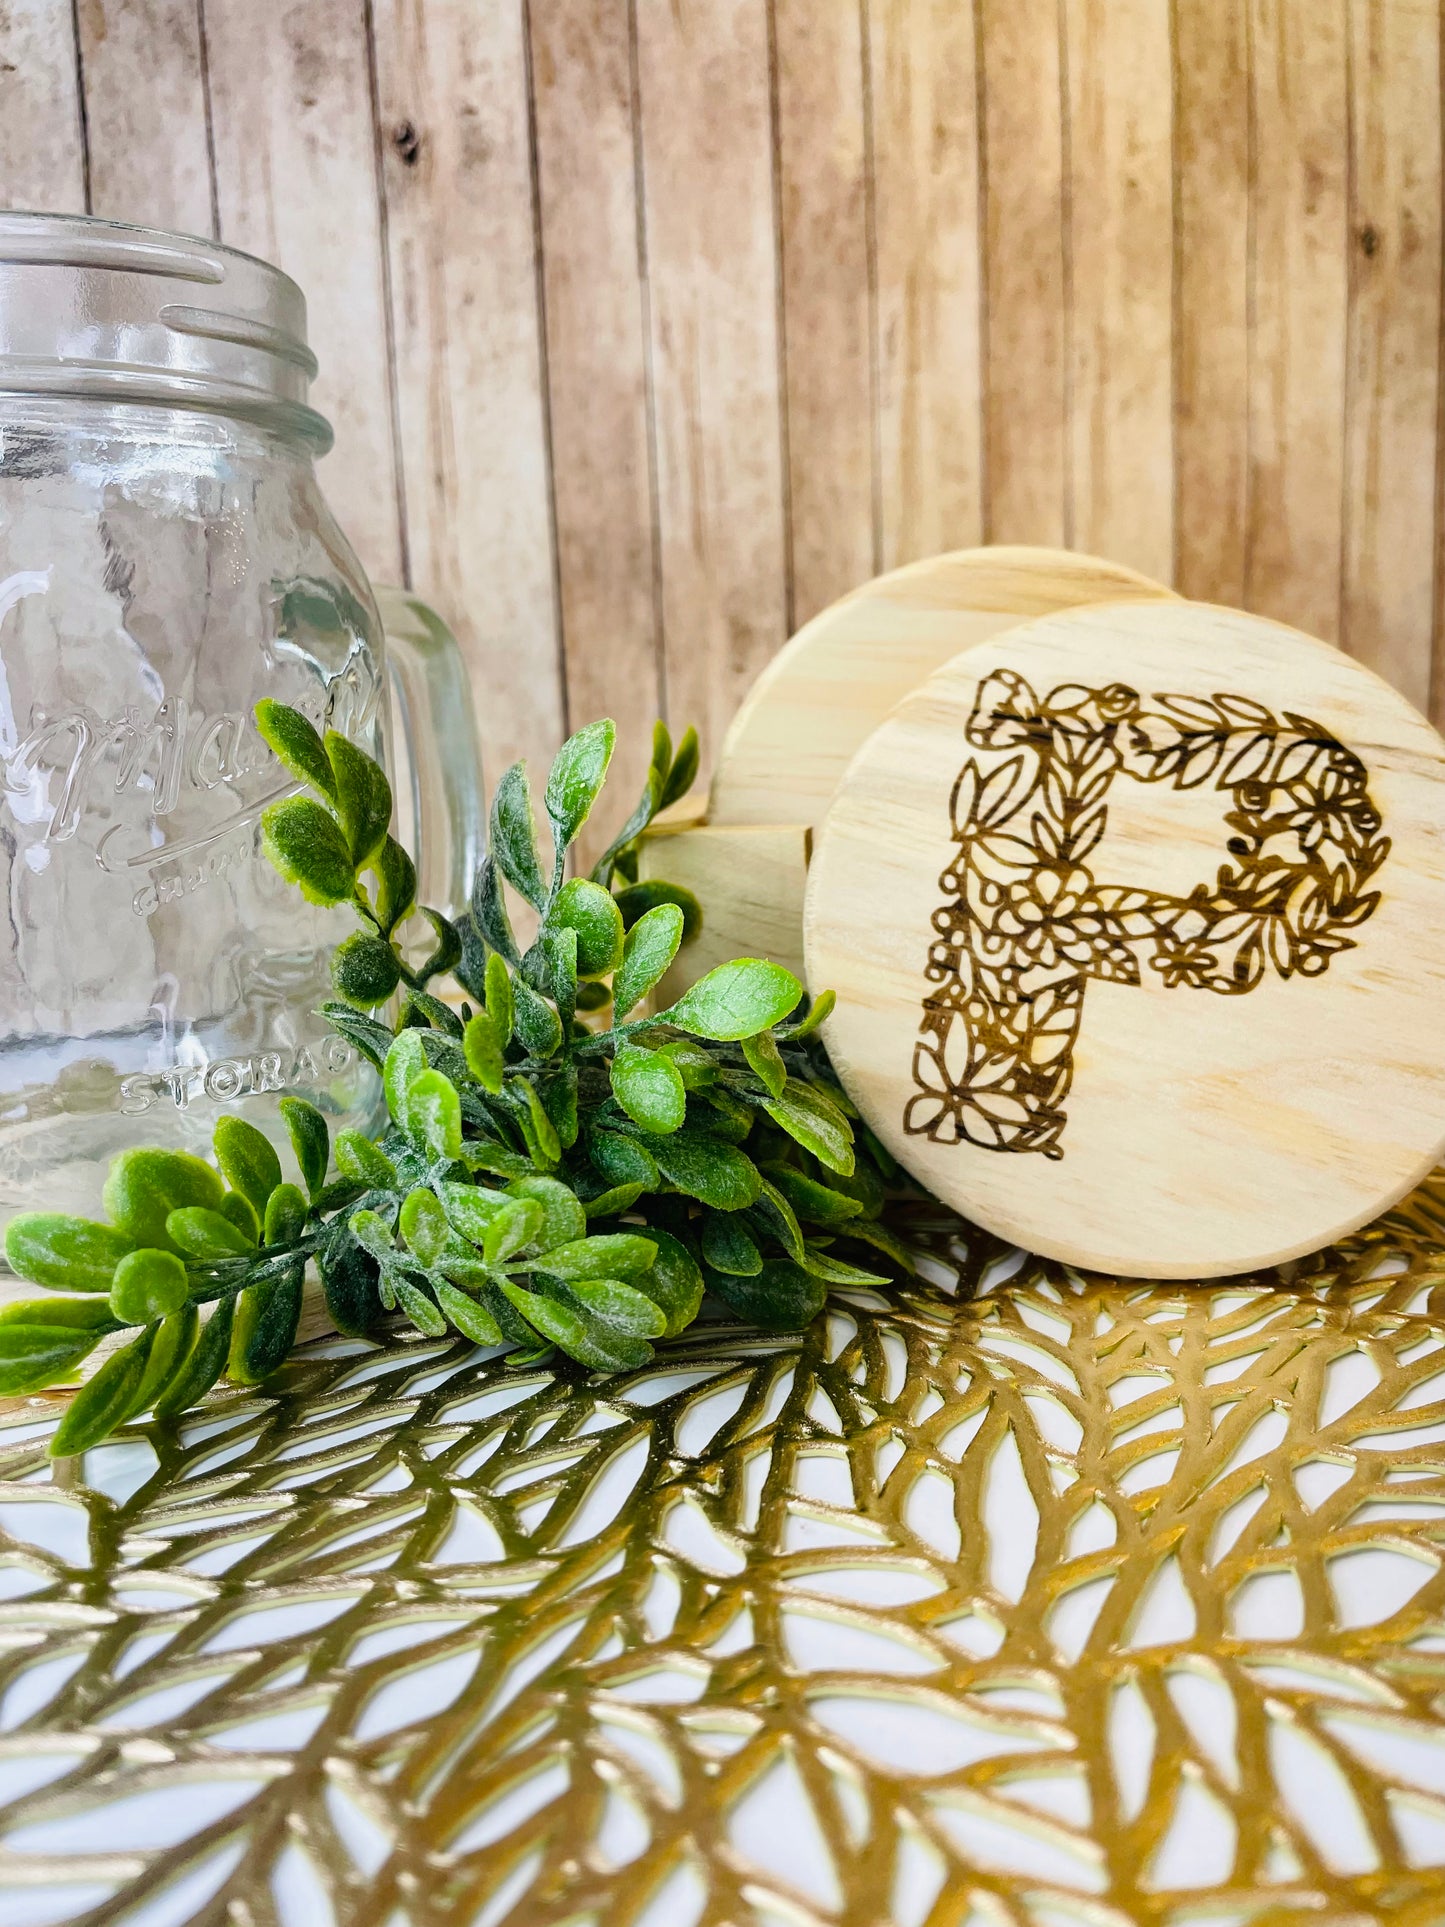 Family Floral Lace Monogram | Wood Coaster 6 Plus Holder |